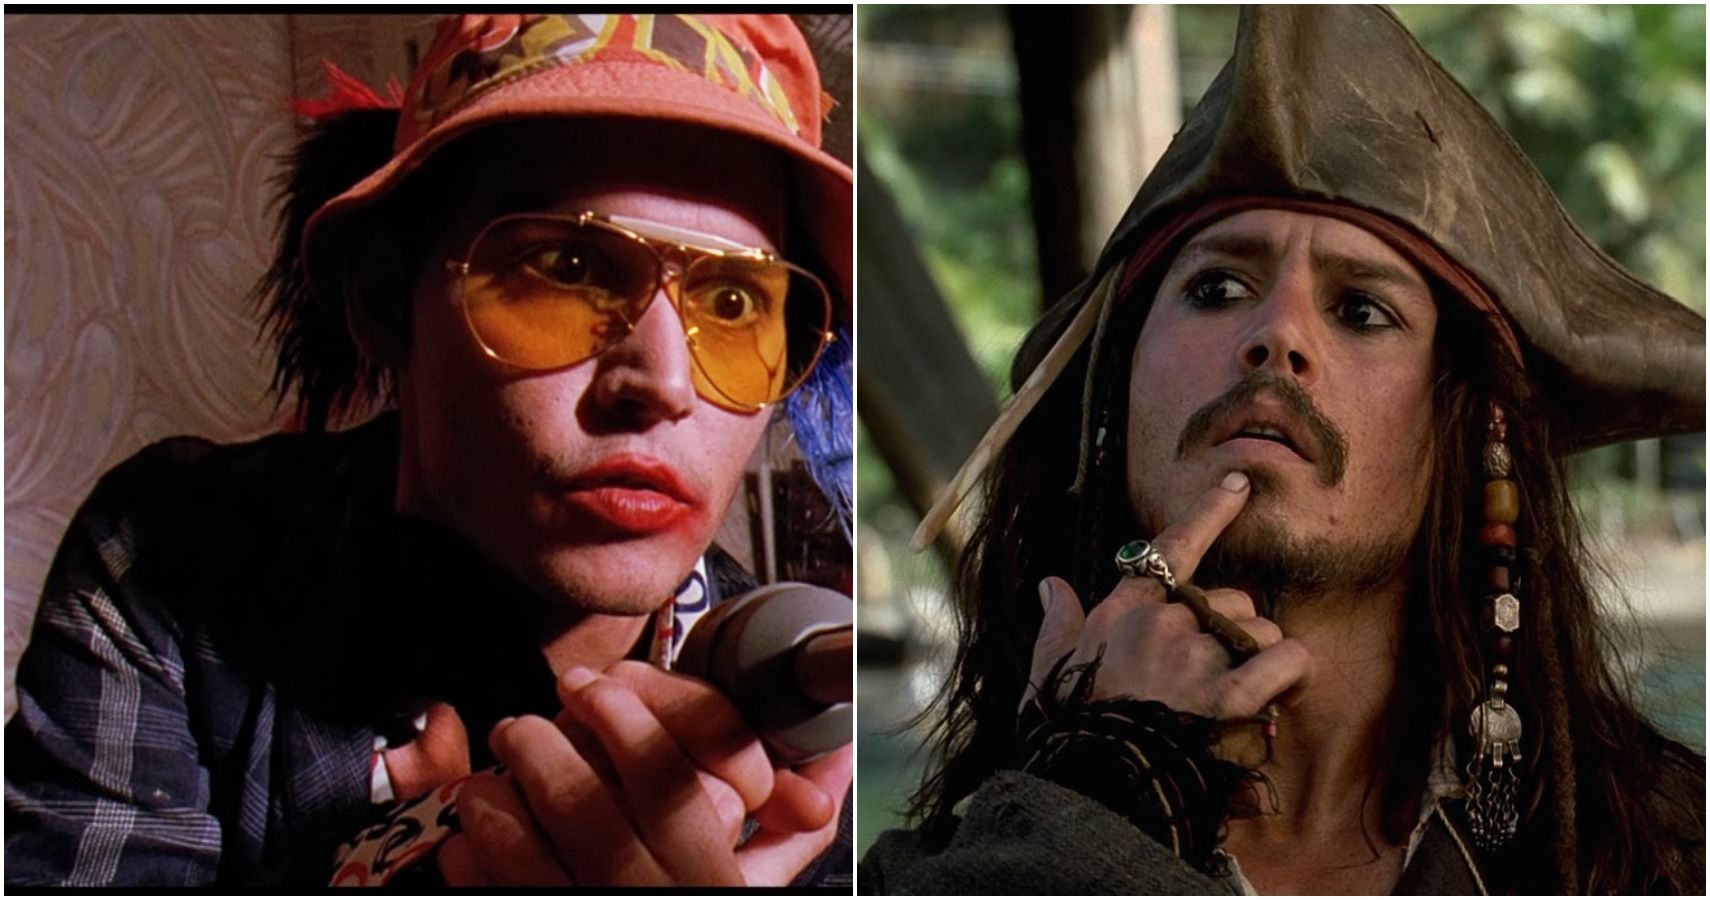 Johnny Depp's 10 Best Movies (According to IMDB)